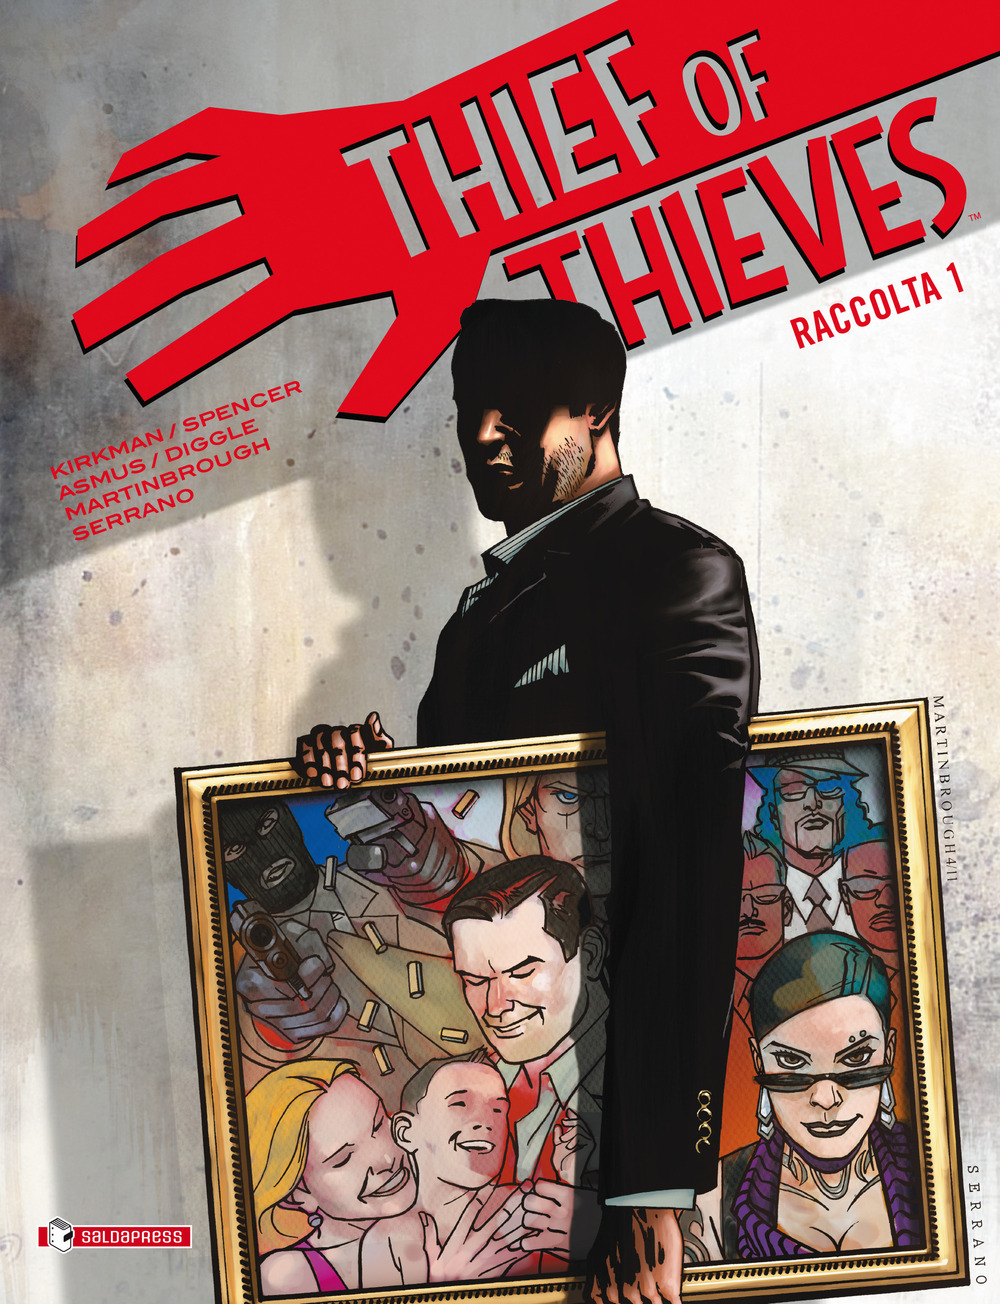 Thief of thieves. Raccolta. Vol. 1